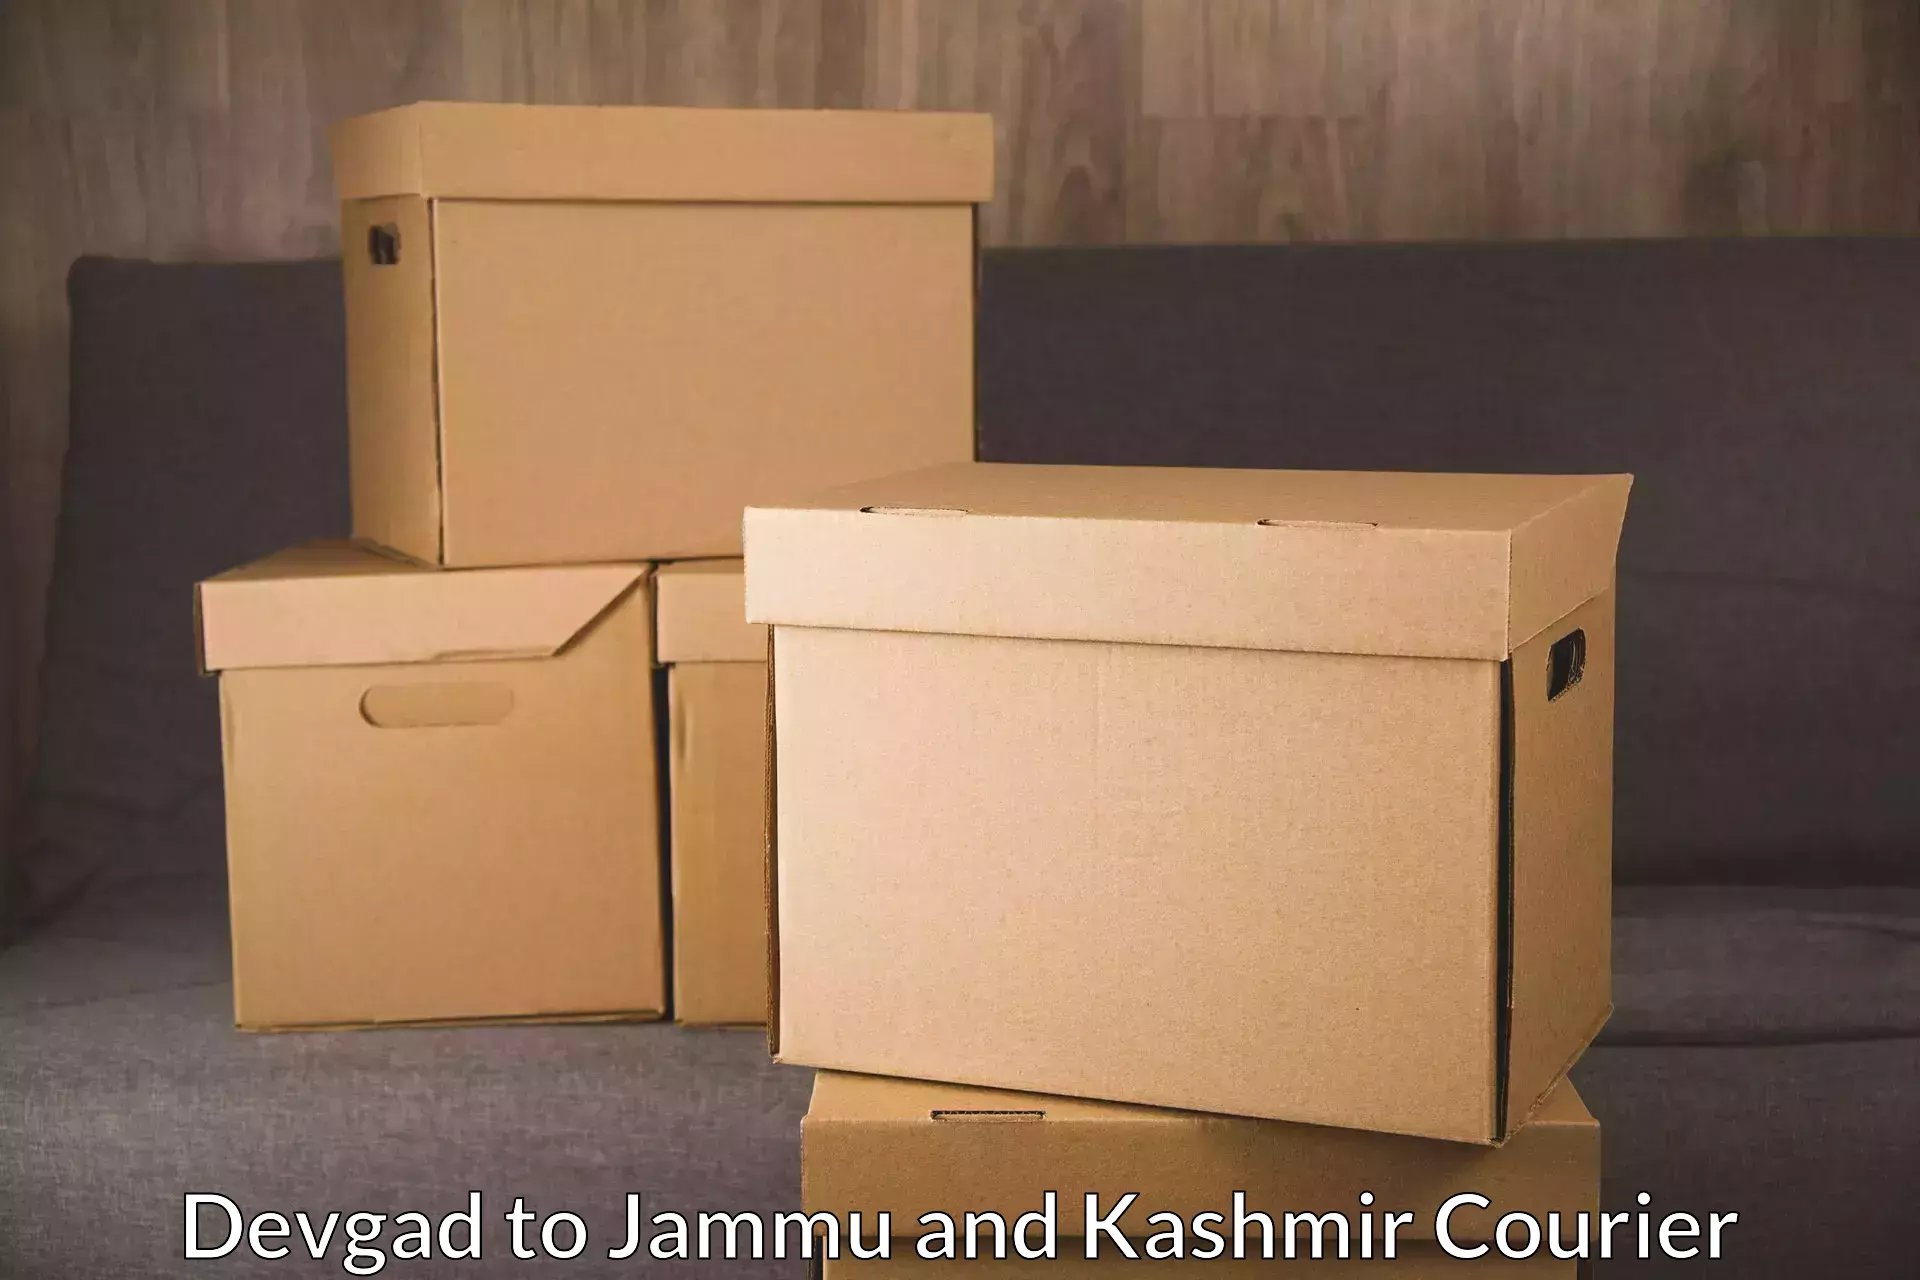 24-hour courier services Devgad to Srinagar Kashmir